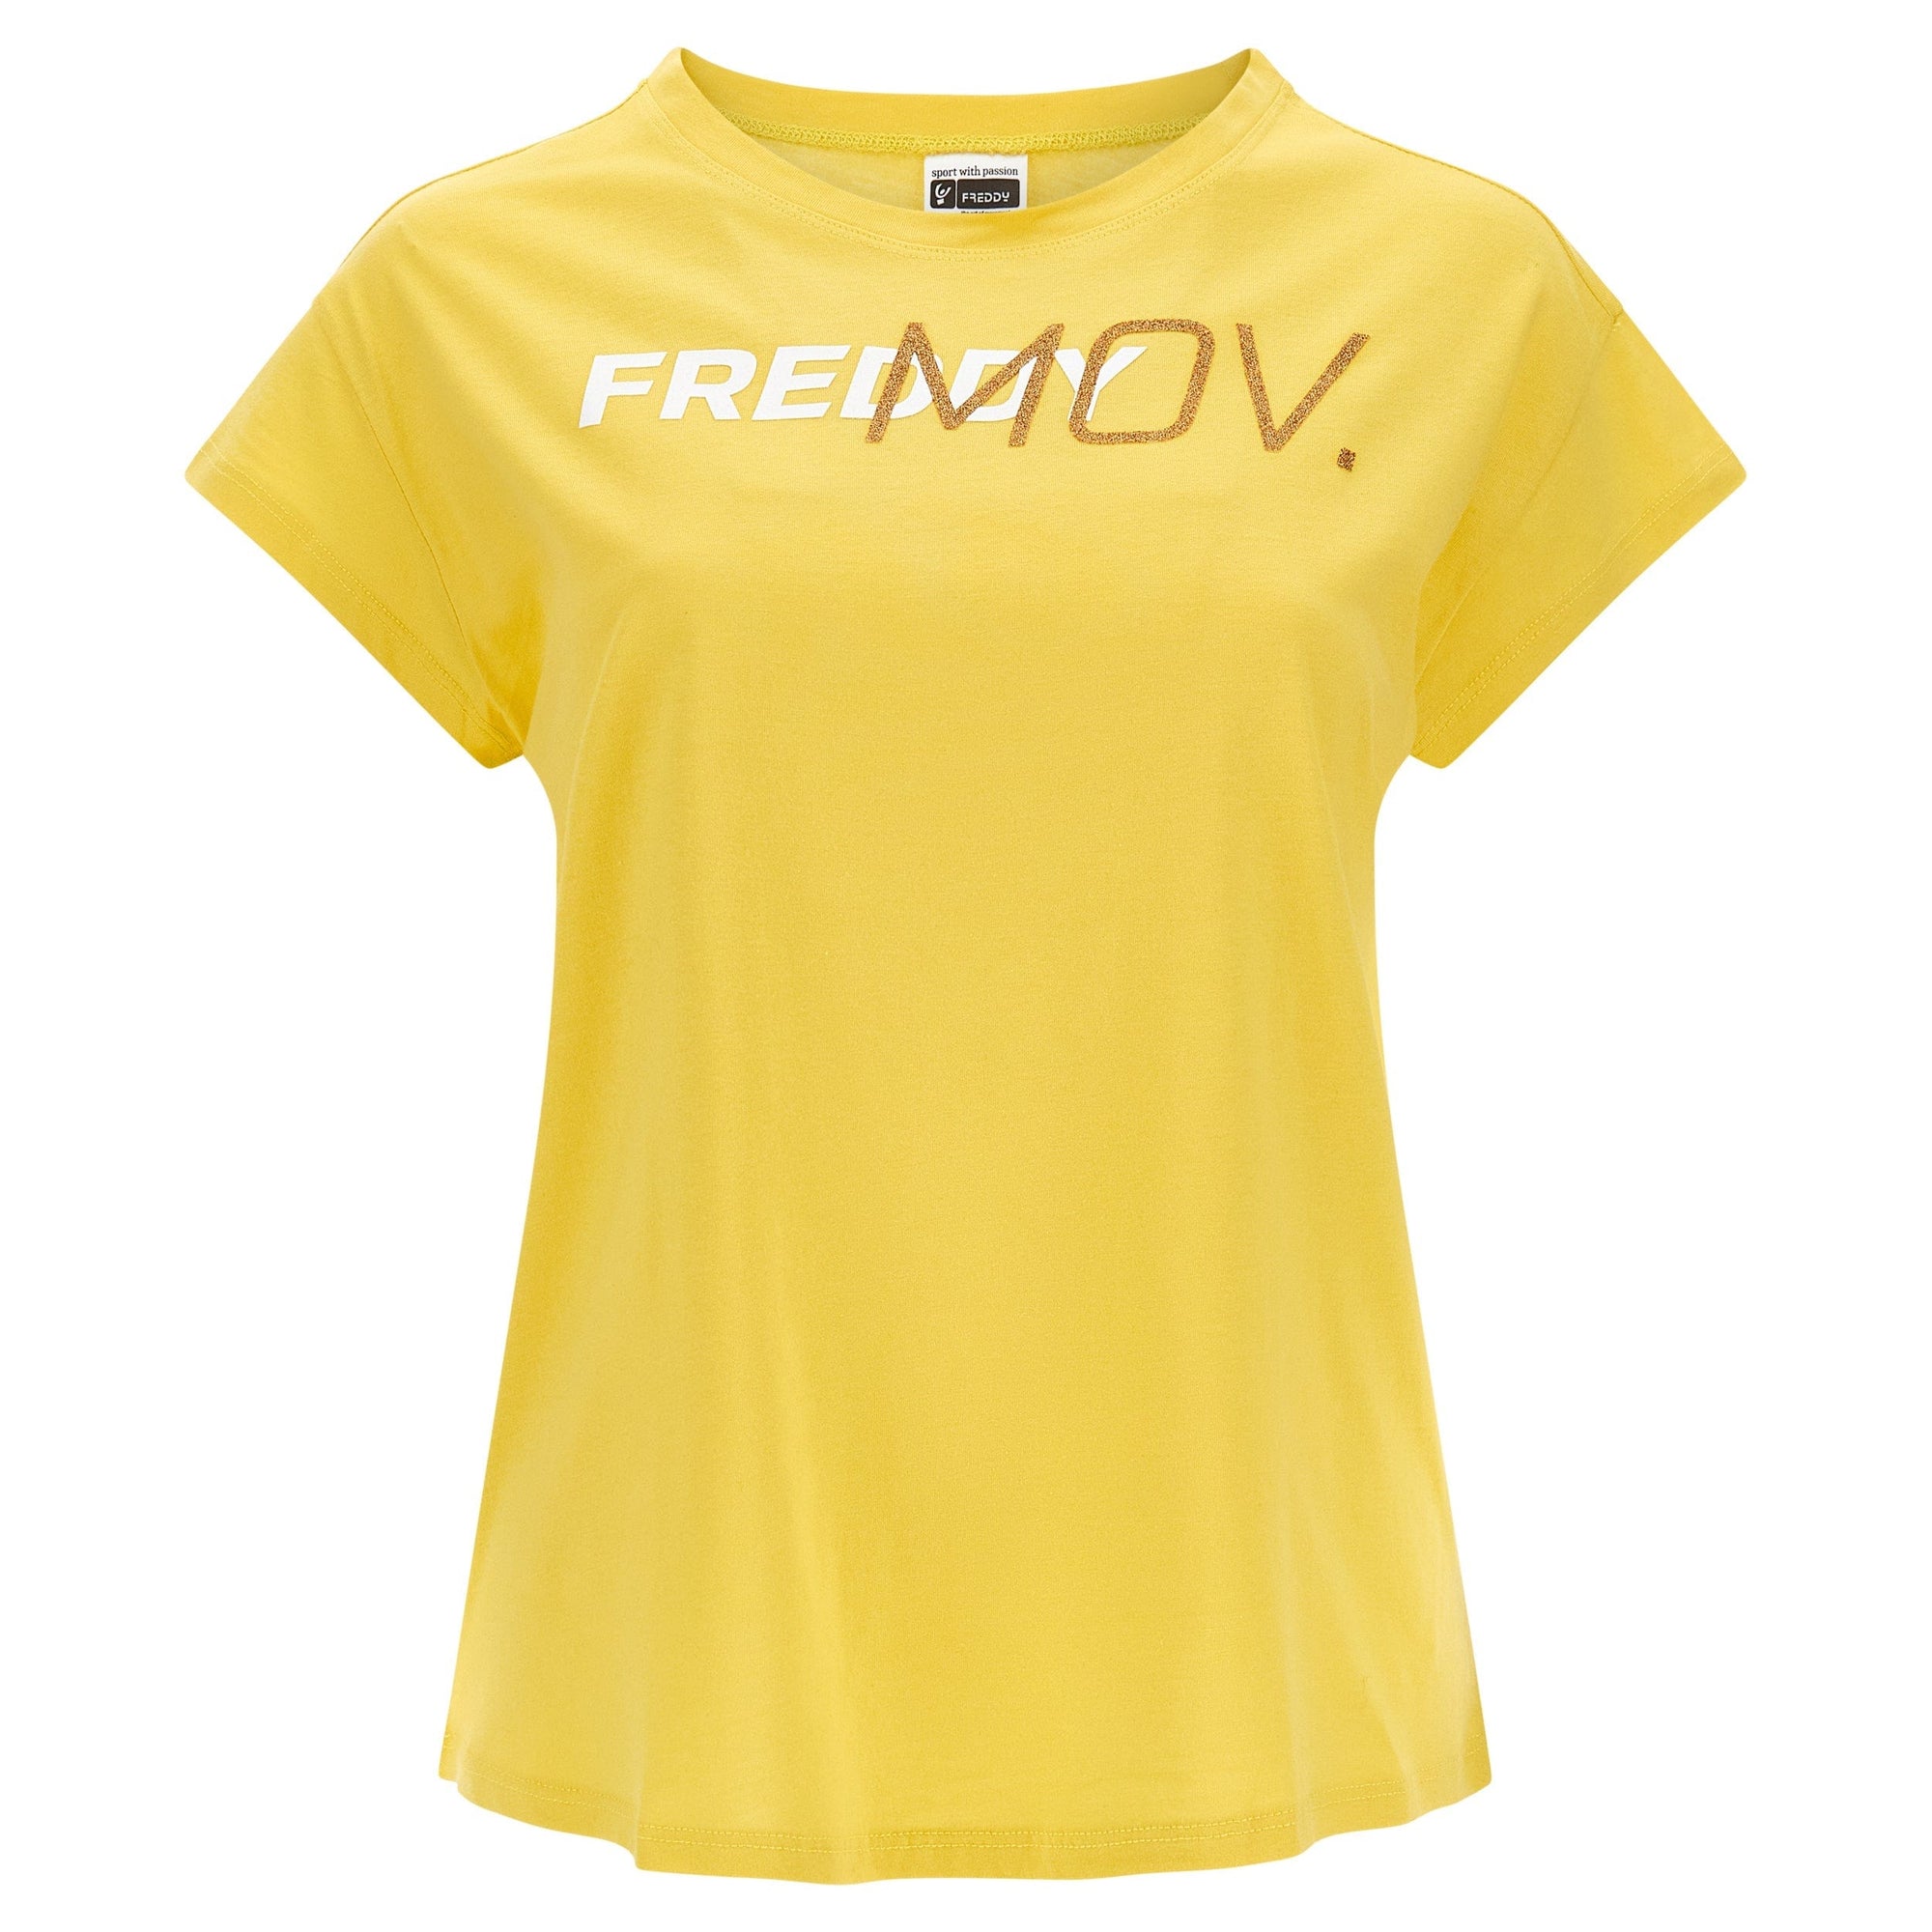 T Shirt with Ultrashort Sleeves - Yellow + Gold Glitter Print 1